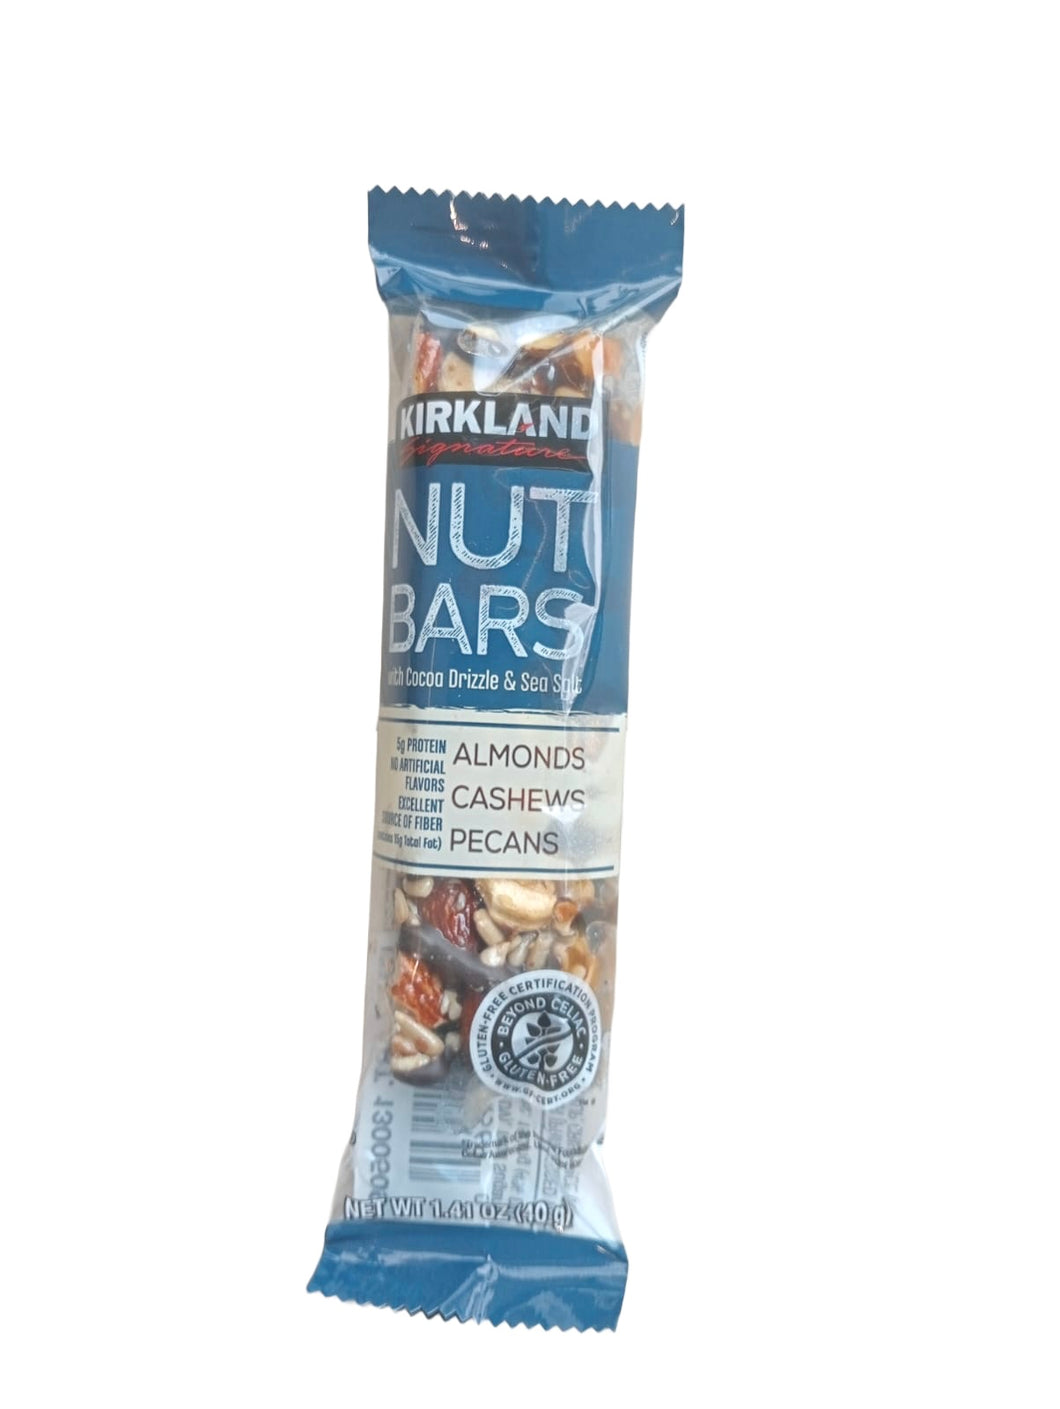 Nut Bars 40g- Kirkland